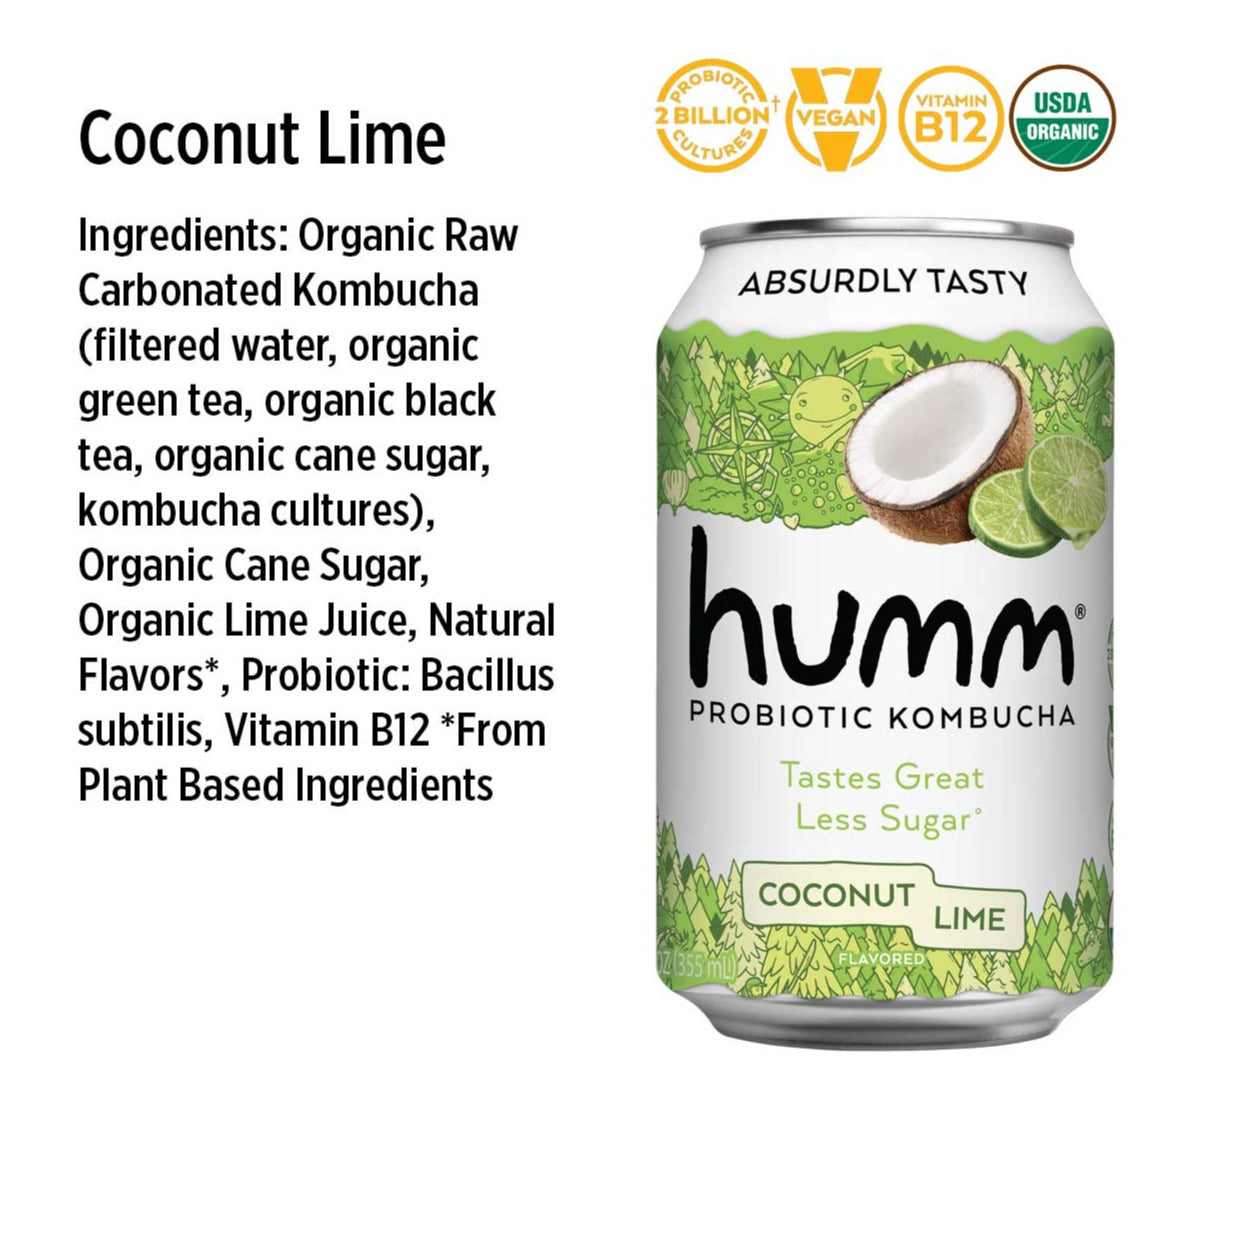 coconut lime ingredients